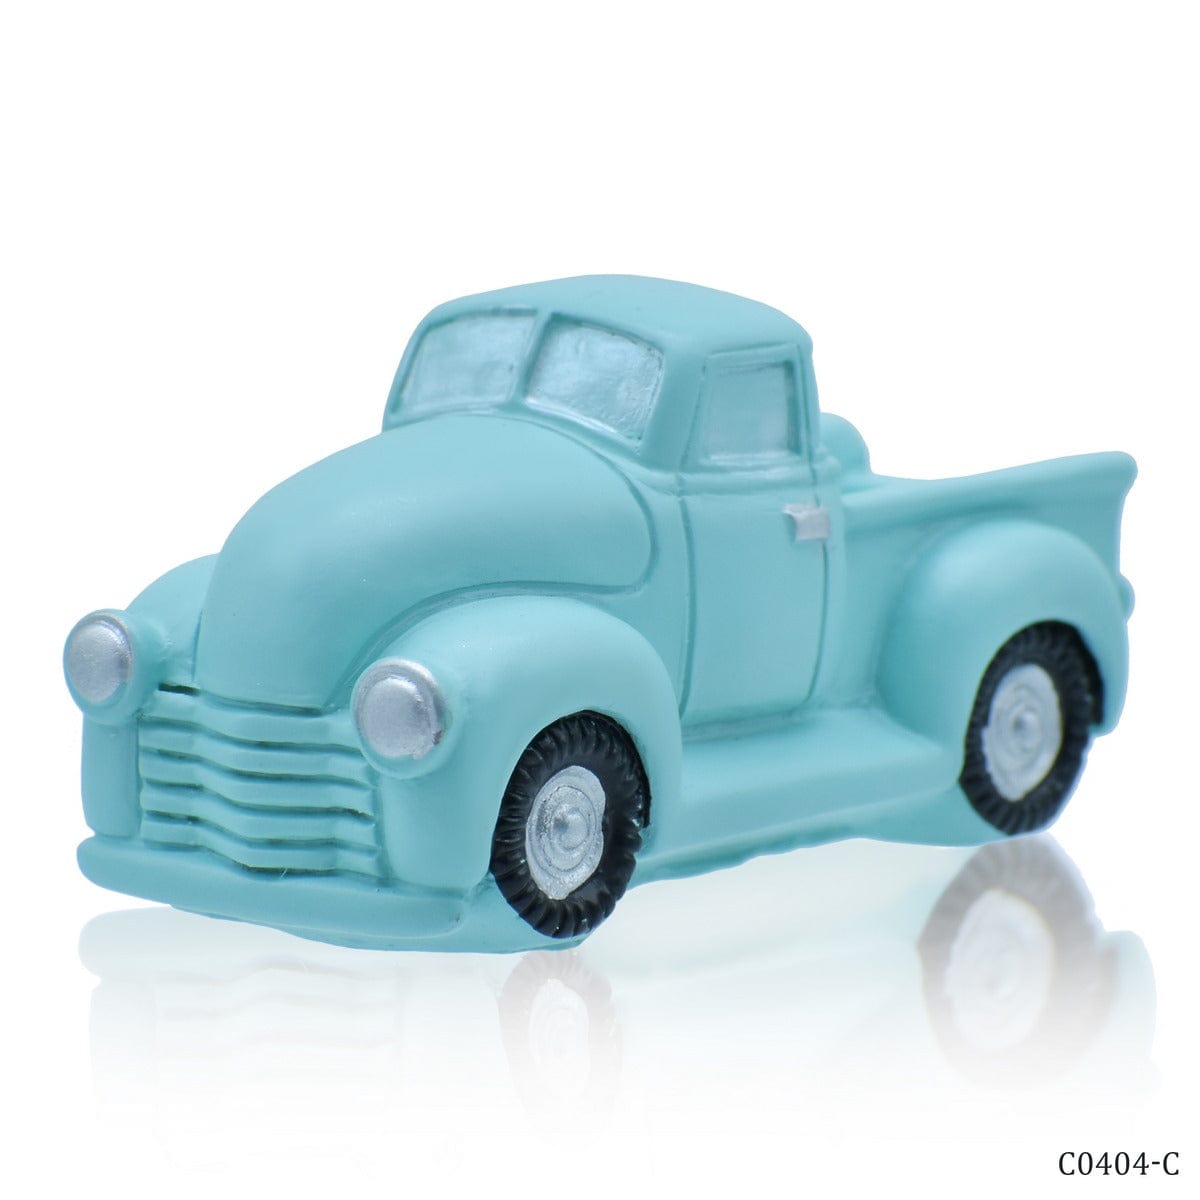 jags-mumbai Miniatures Miniature Model Truck Blue Colour 1Pcs (C0404-4)